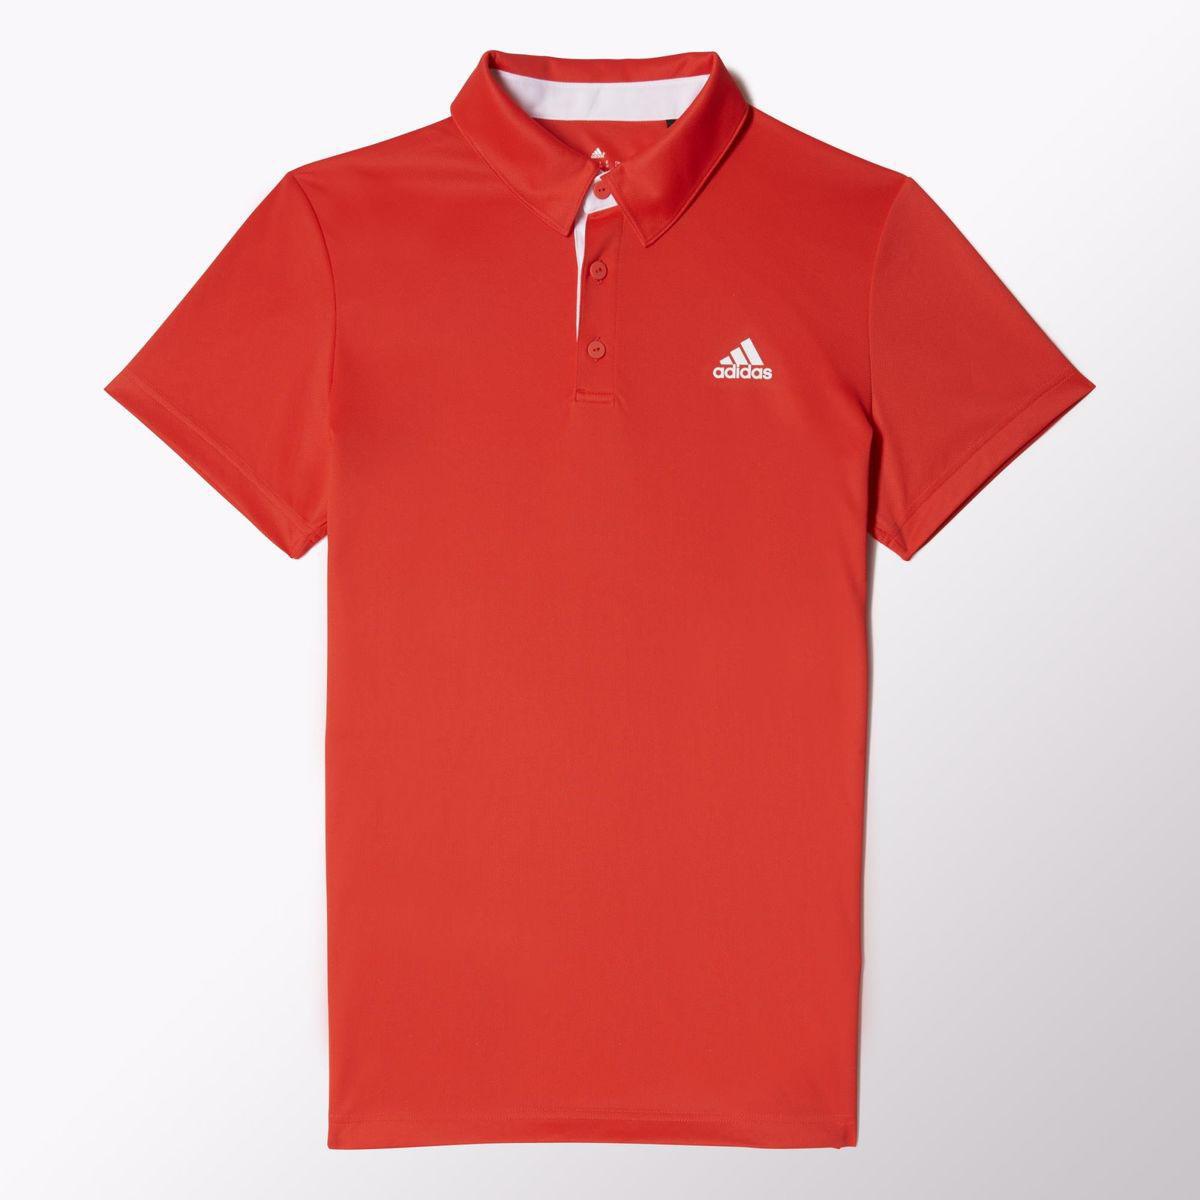 Adidas Mens Sequentials Fab Polo - Bright Red - Tennisnuts.com